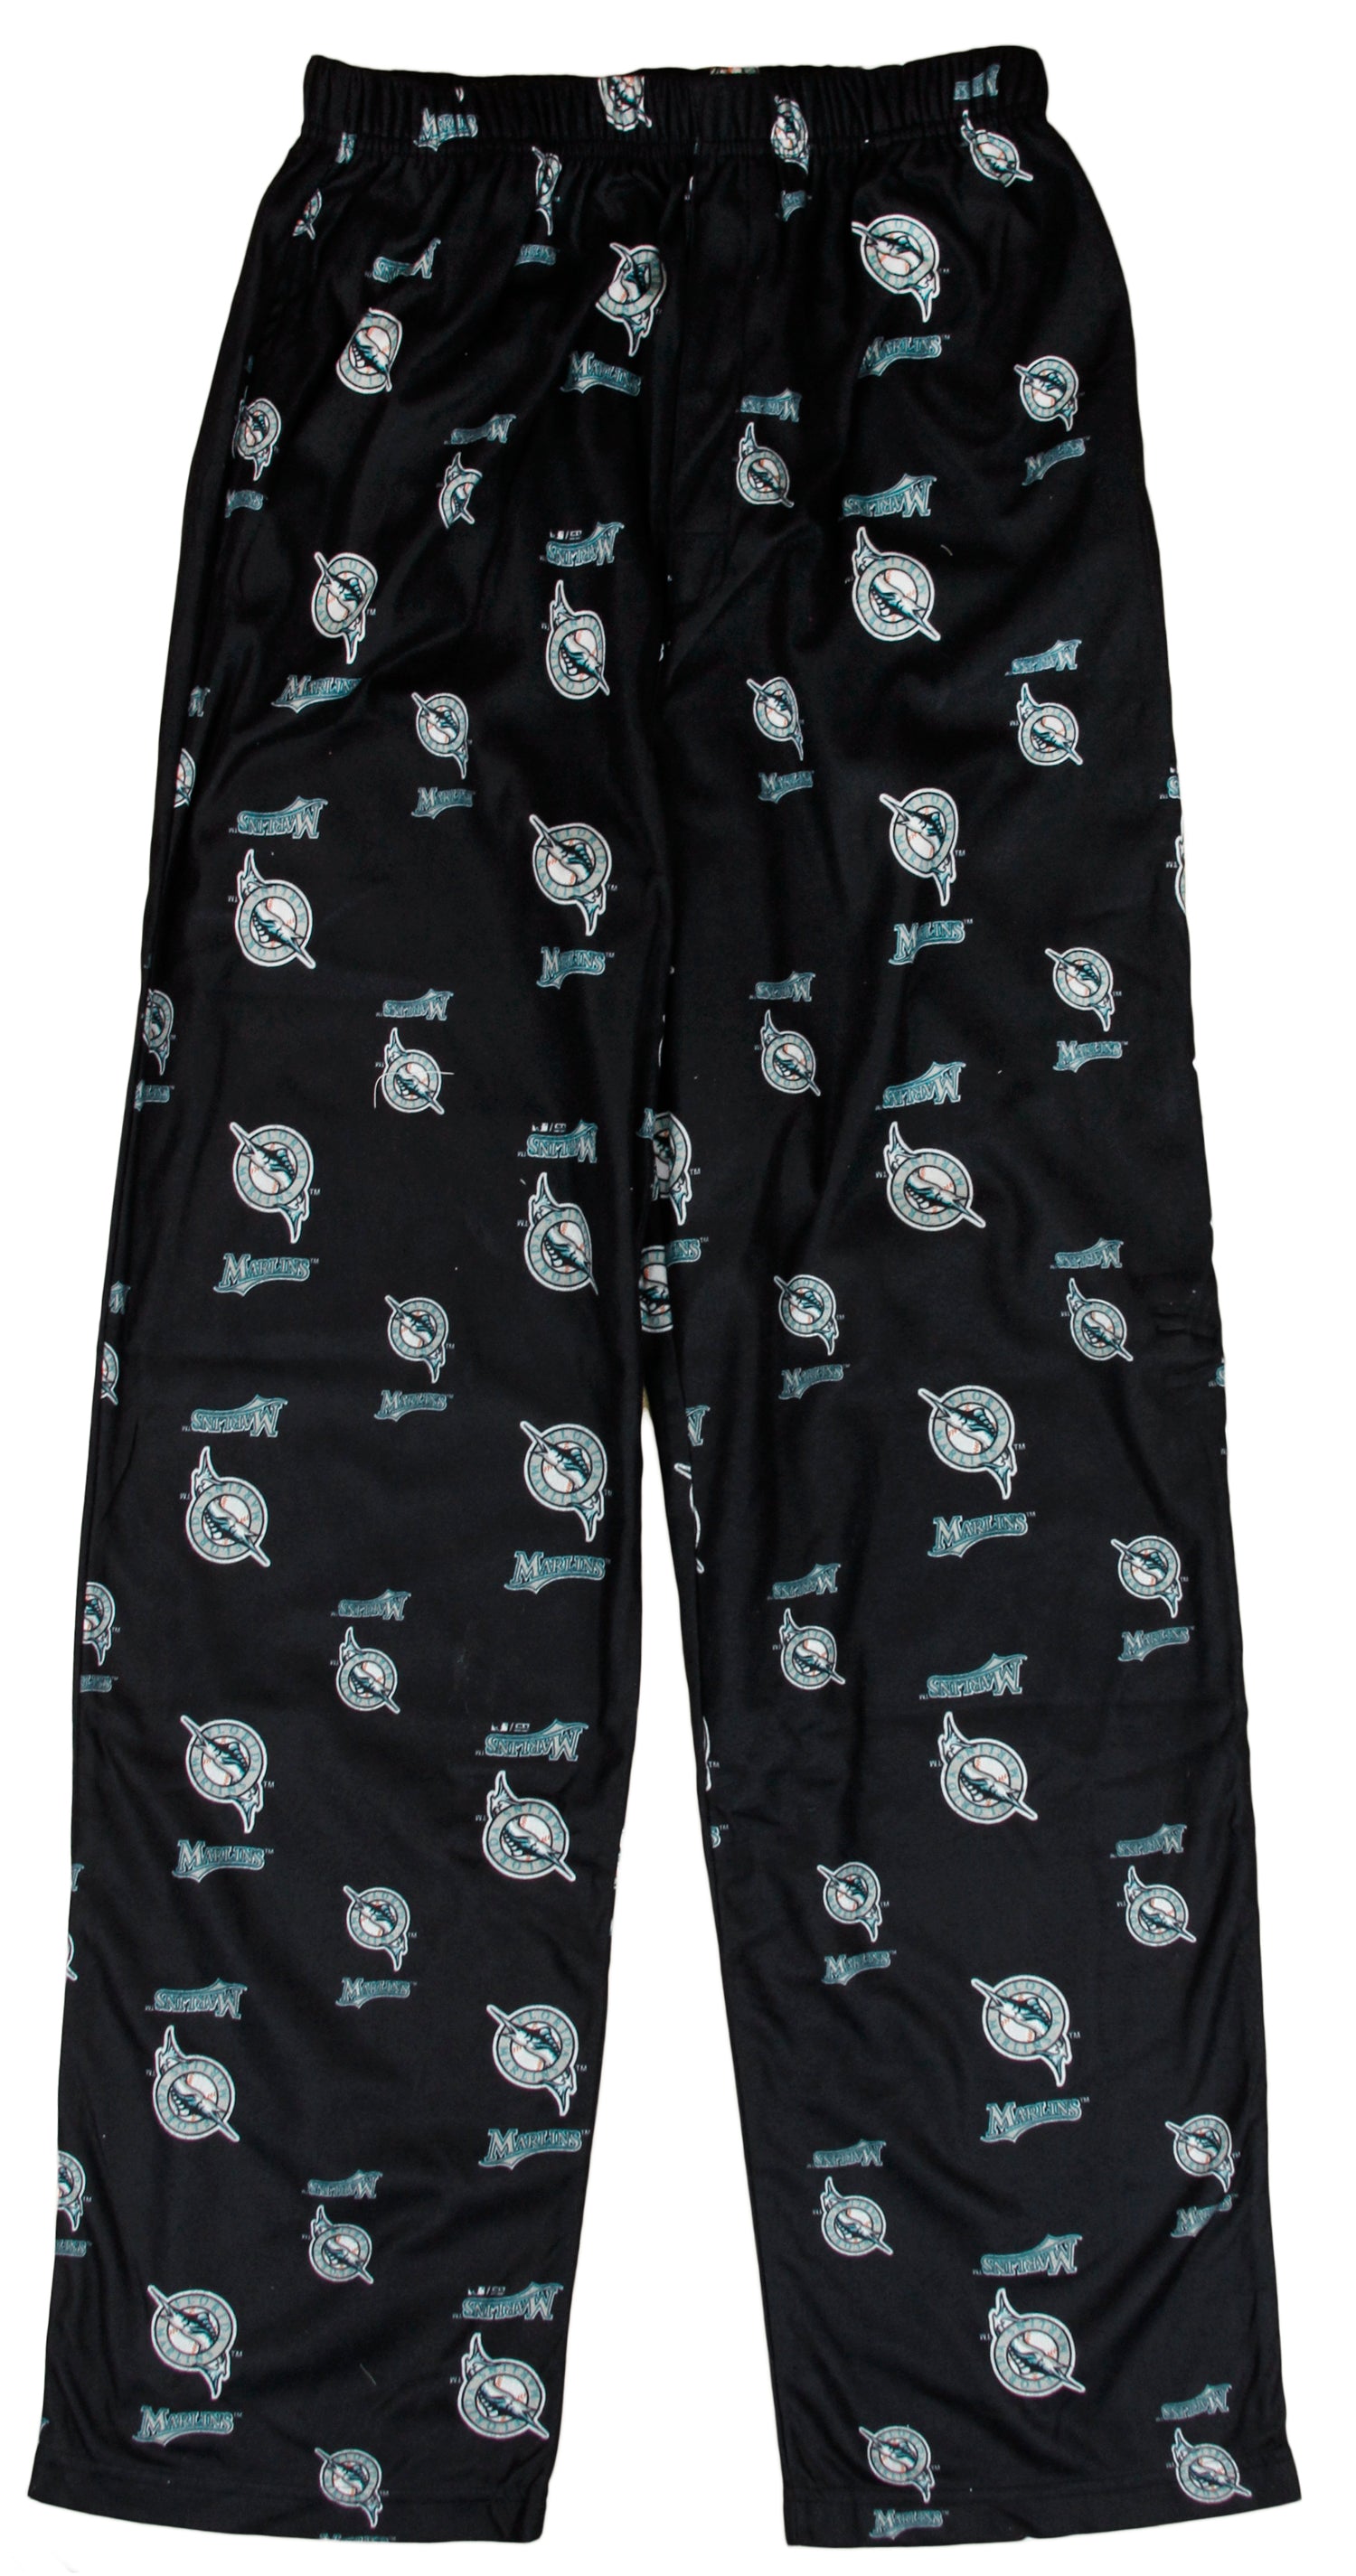 MLB Baseball Kids / Youth Florida Marlins Lounge Pajama Pants - Navy Blue - 2XL (18)